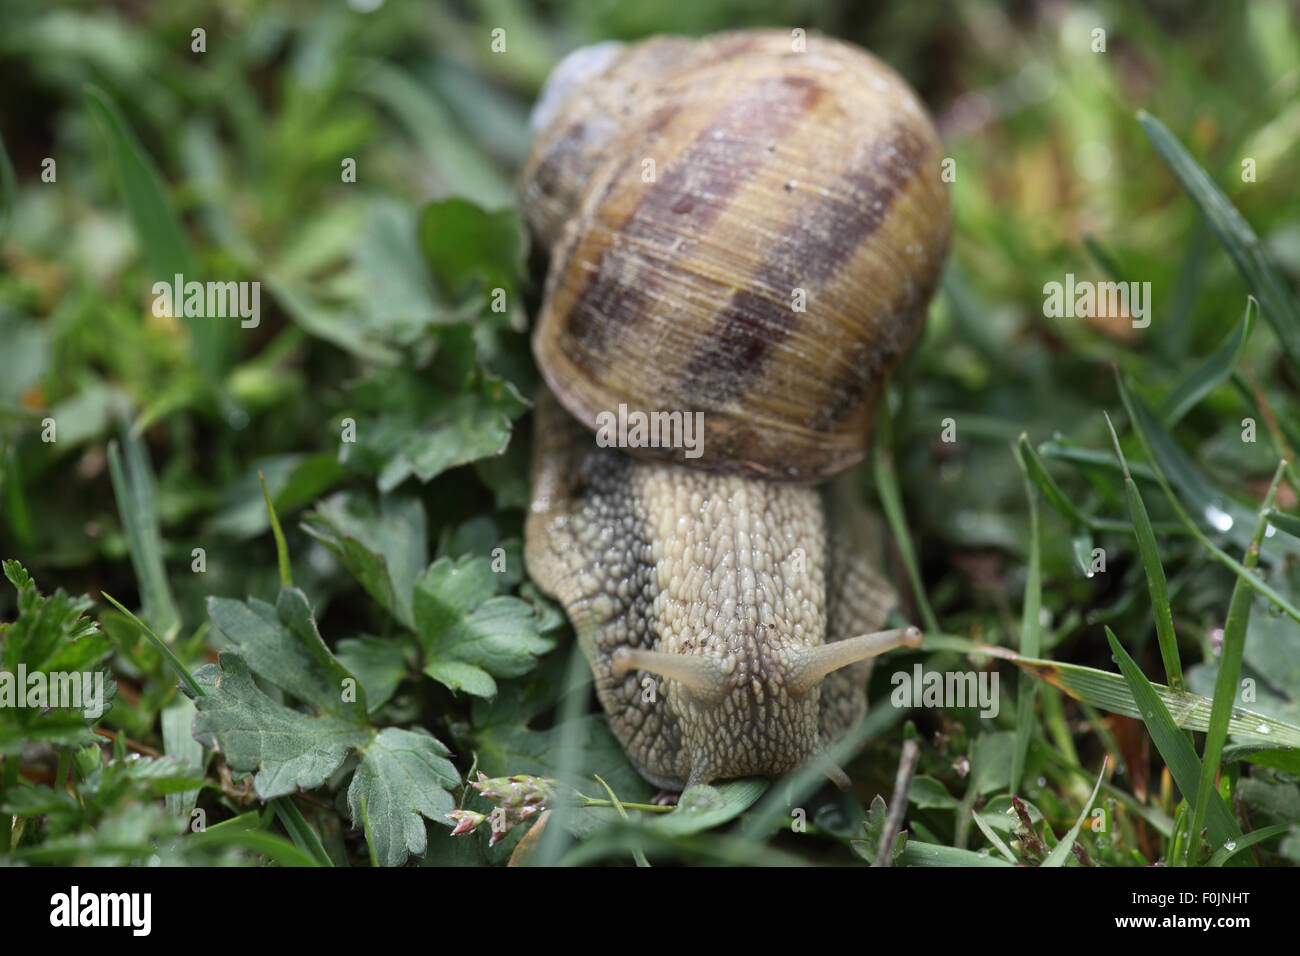 Roman snail Helix pomatia on grass front view Stock Photo